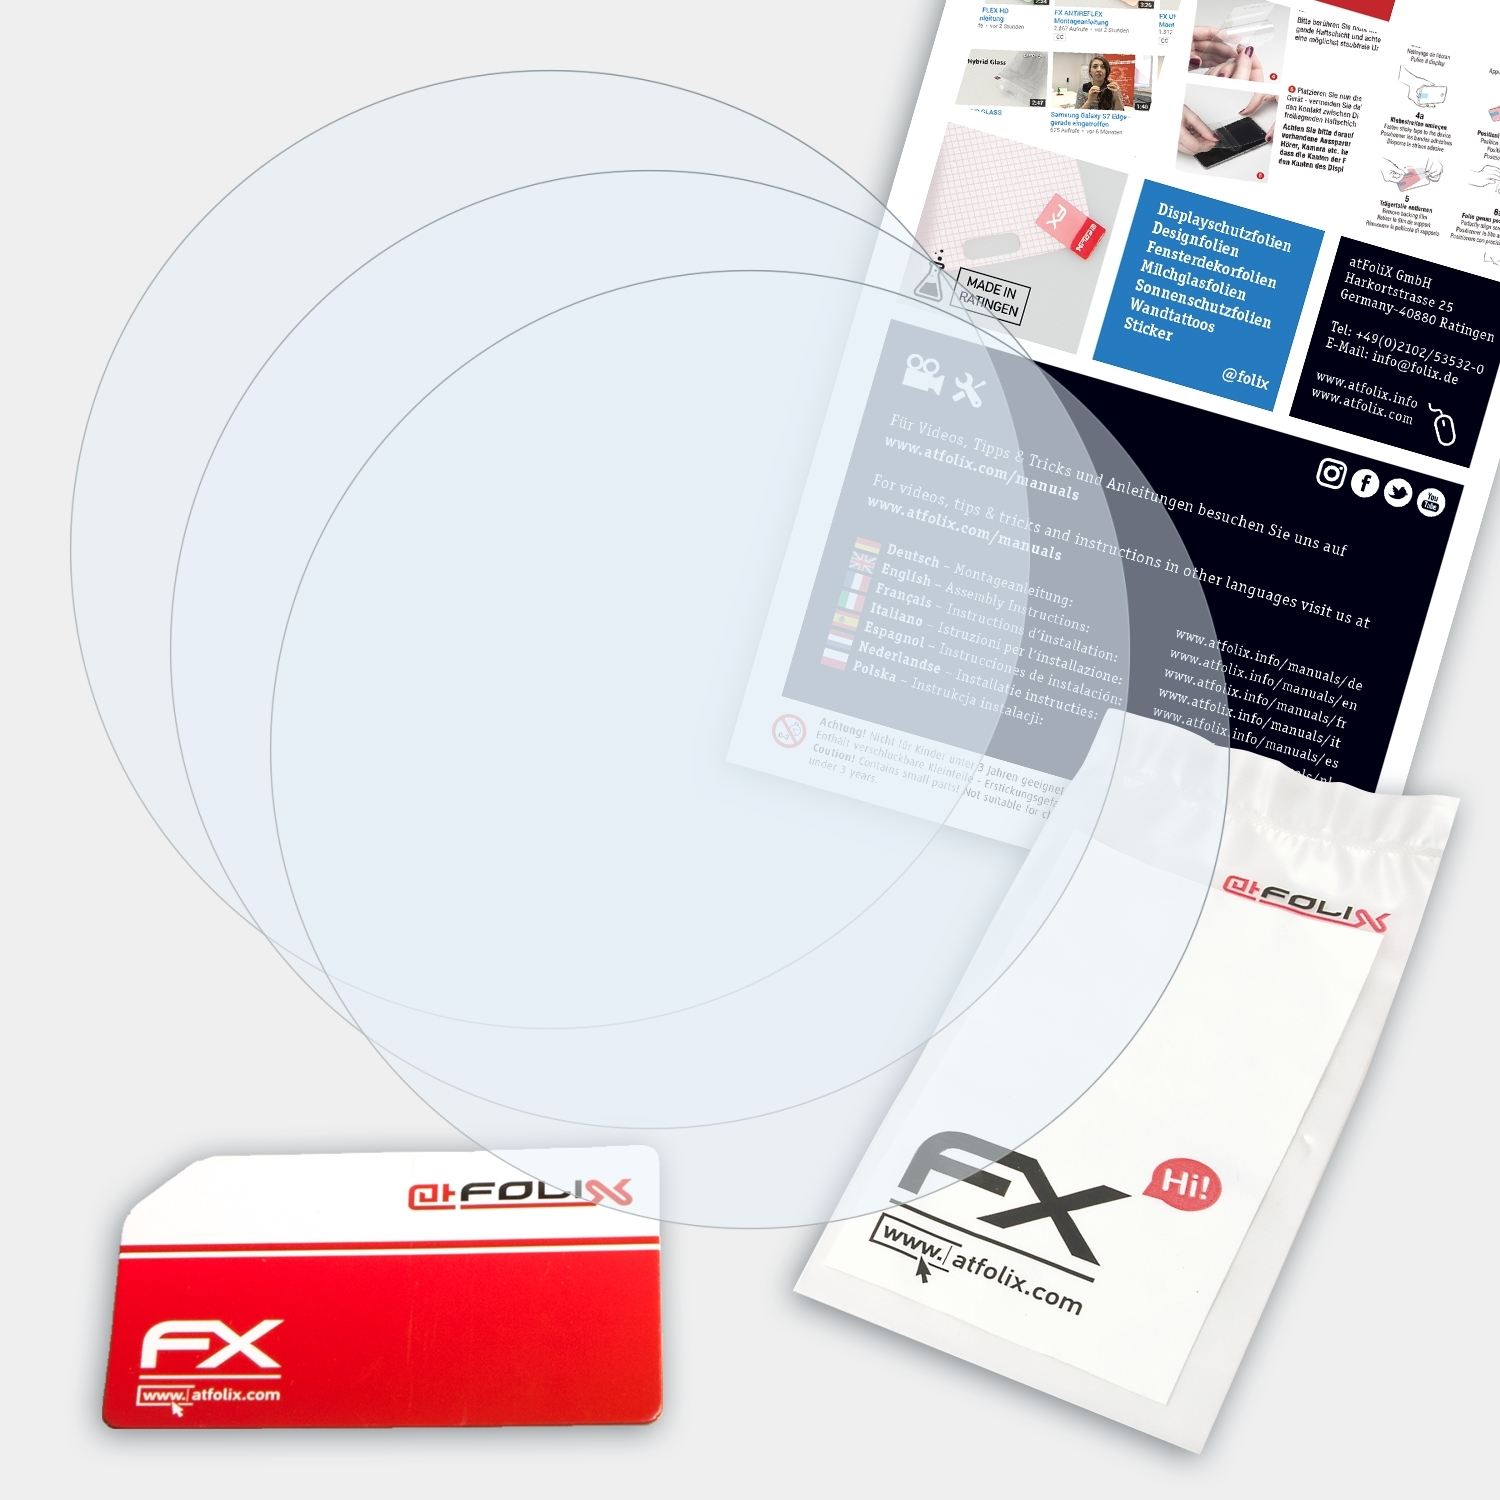 ATFOLIX 3x FX-Clear Displayschutz(für Fossil FB-01 (42mm))